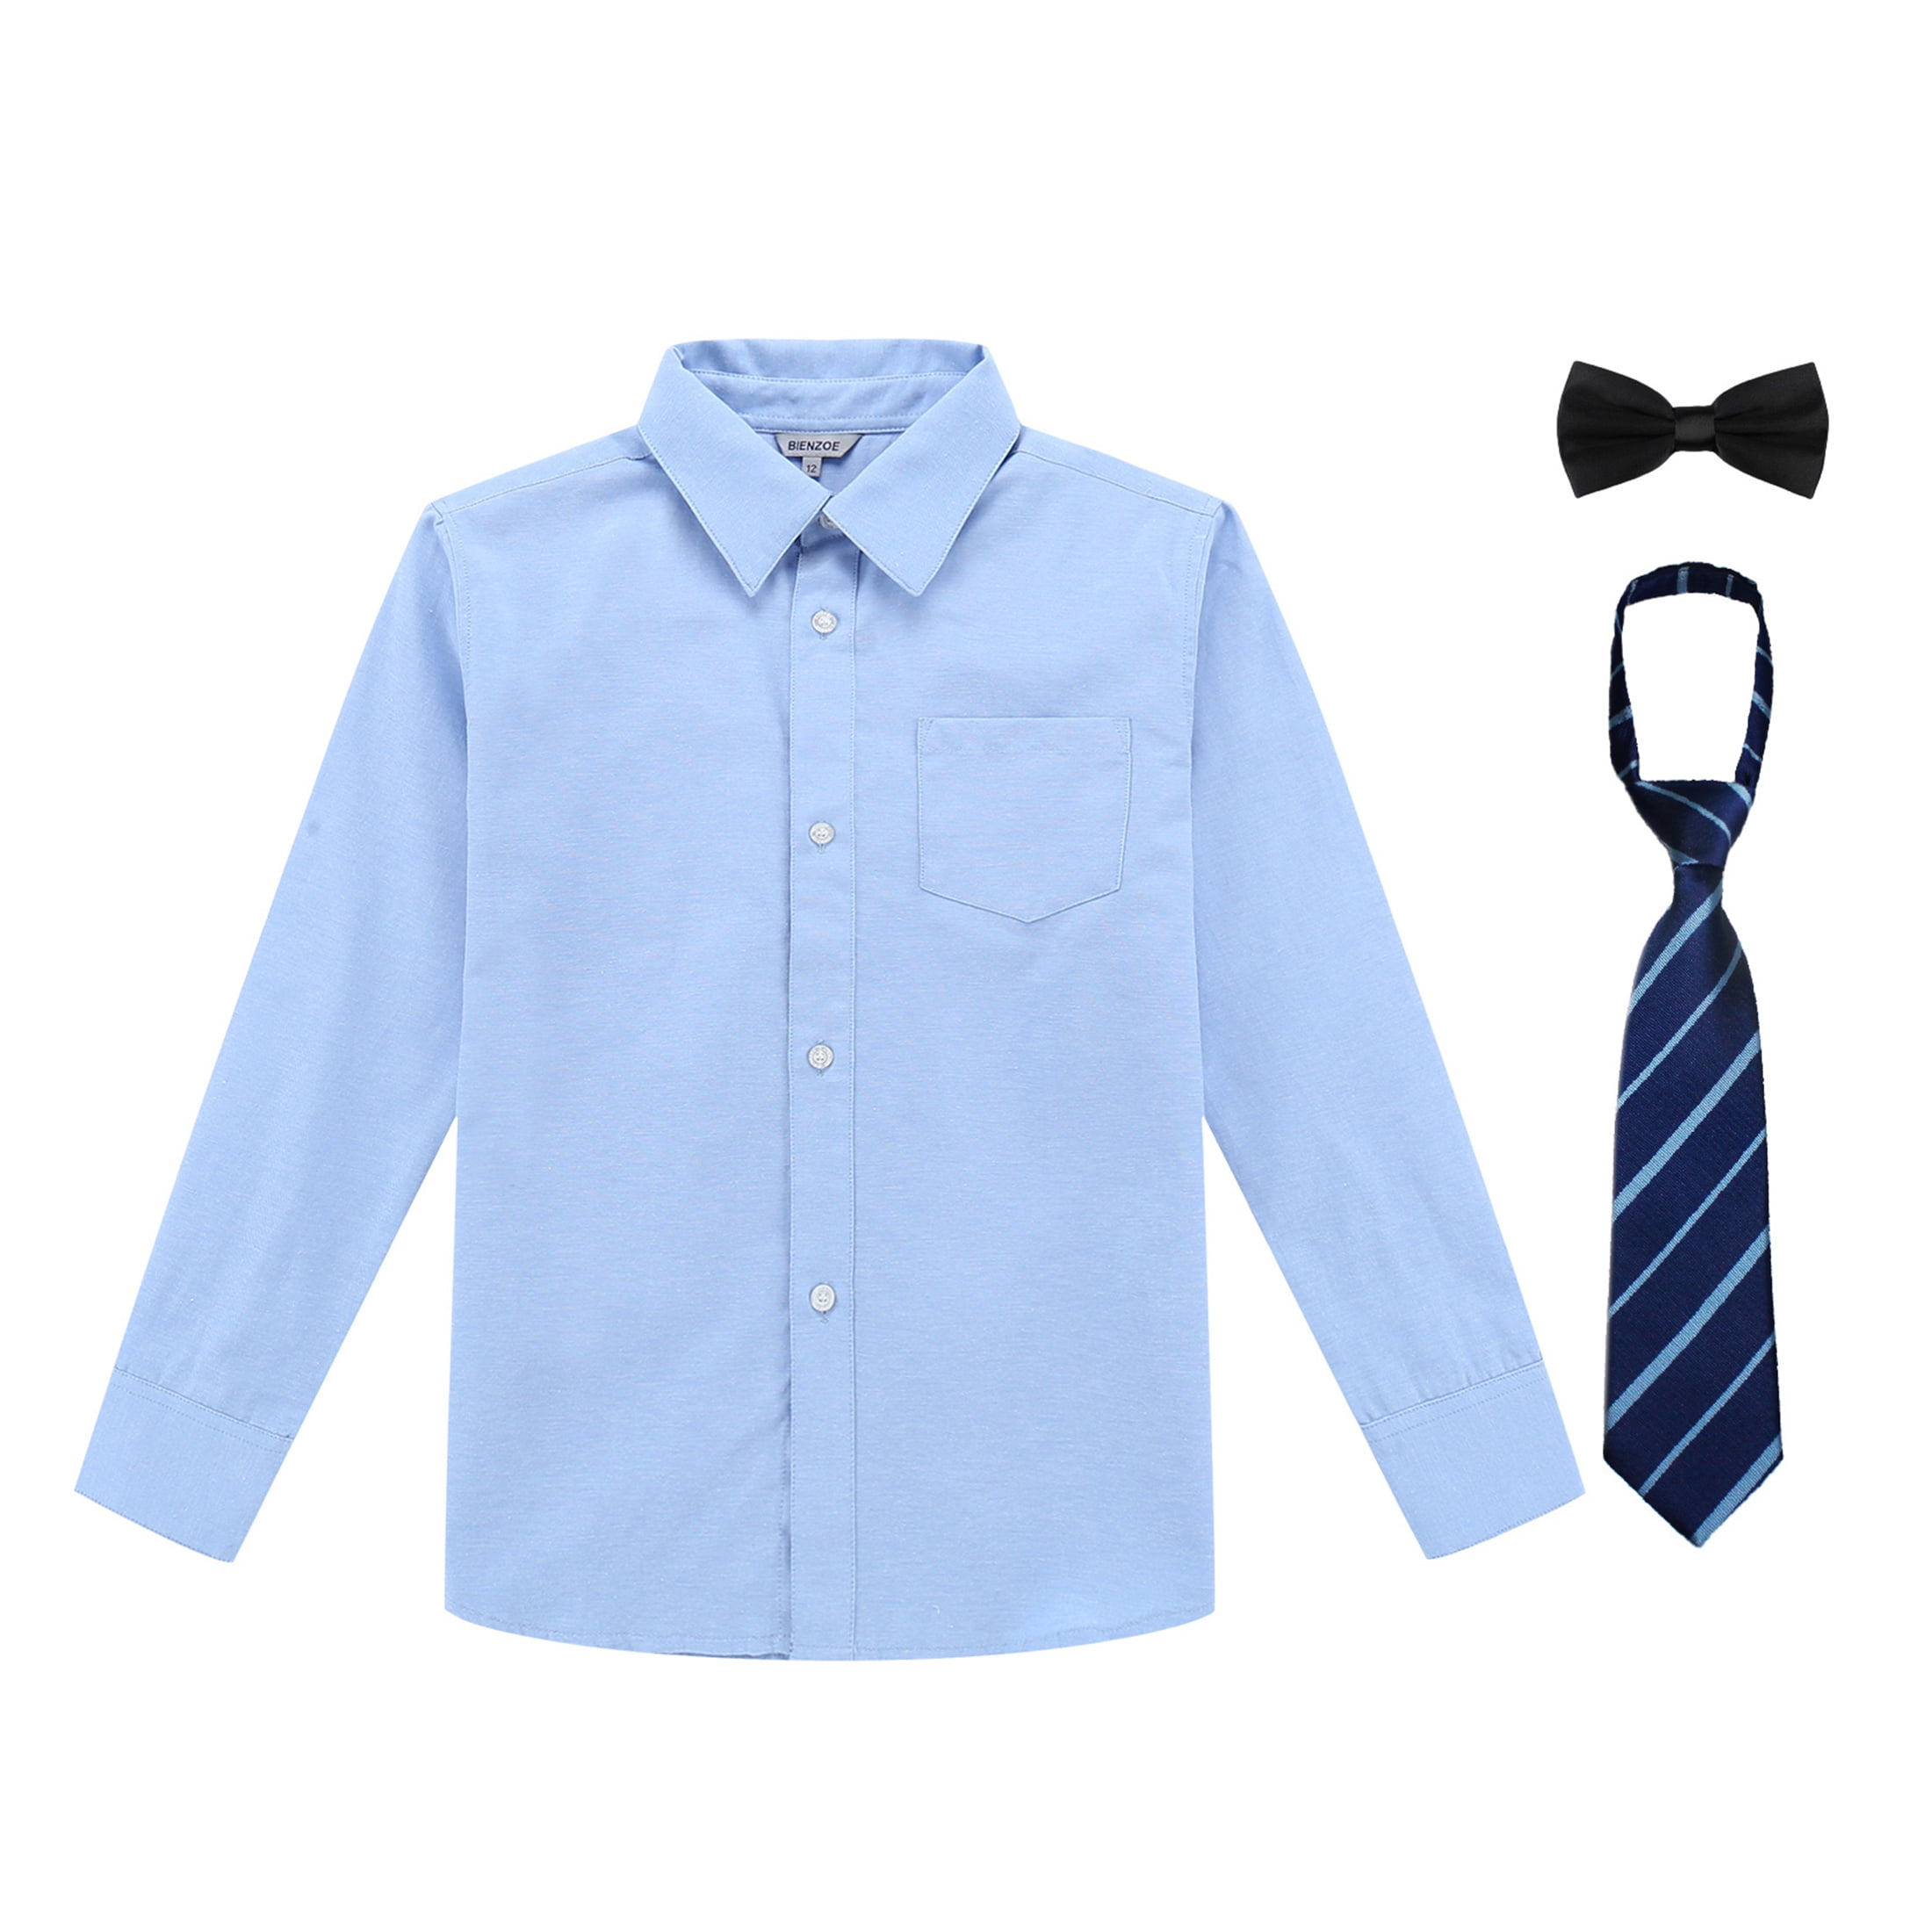 Bienzoe Boys School Uniform Long Sleeve Oxford Shirt 2Pcs Pack 